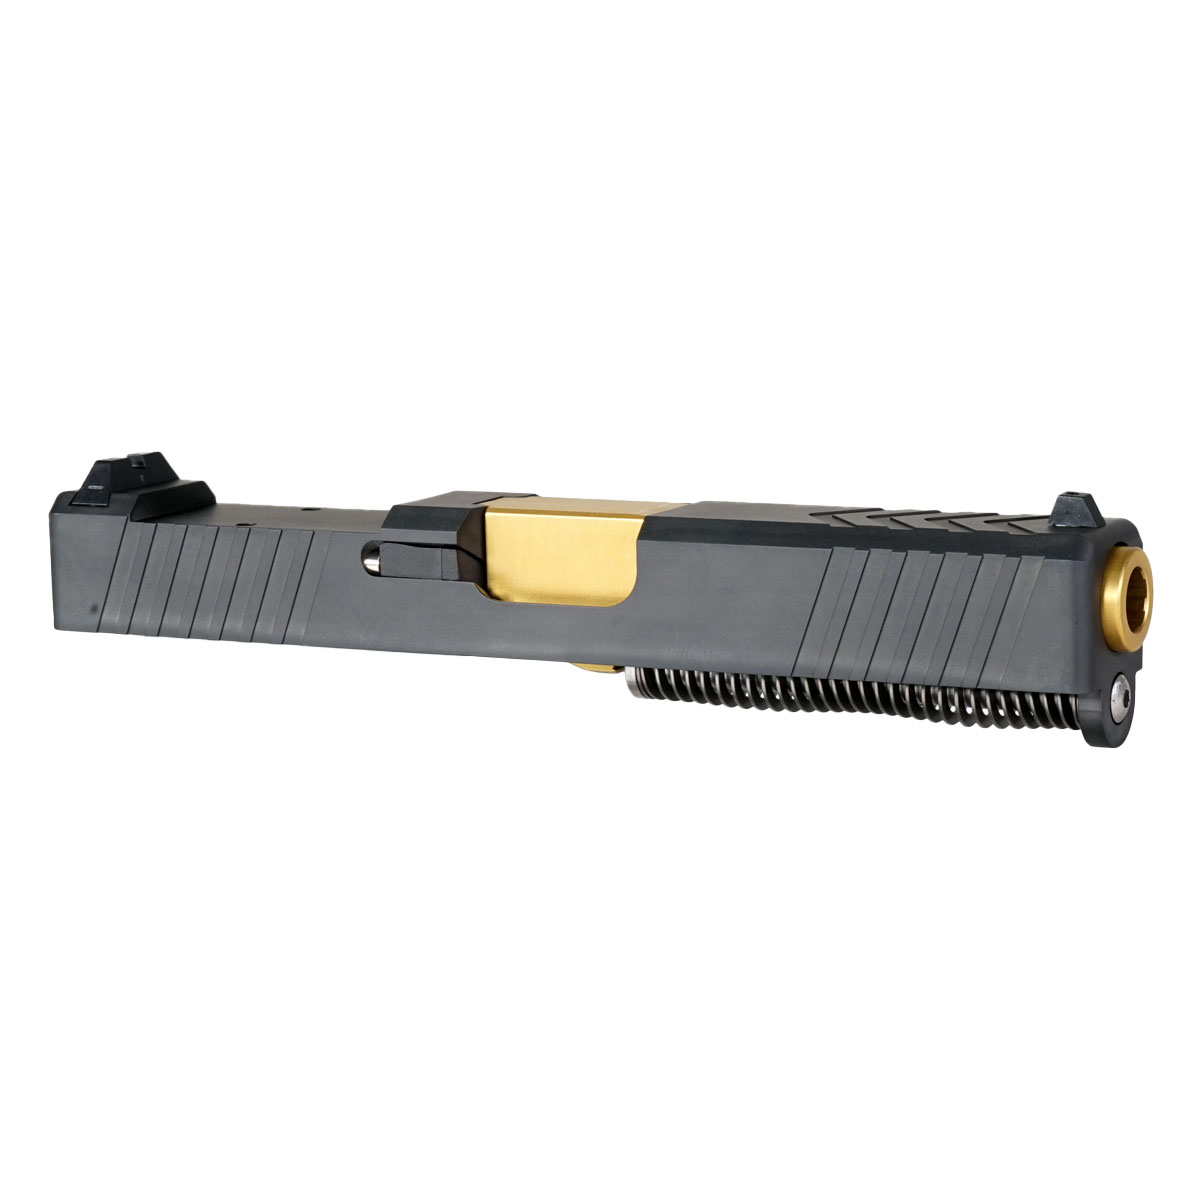 MMC 'Swindler's Chest' 9mm Complete Slide Kit - Glock 19 Gen 1-3 Compatible